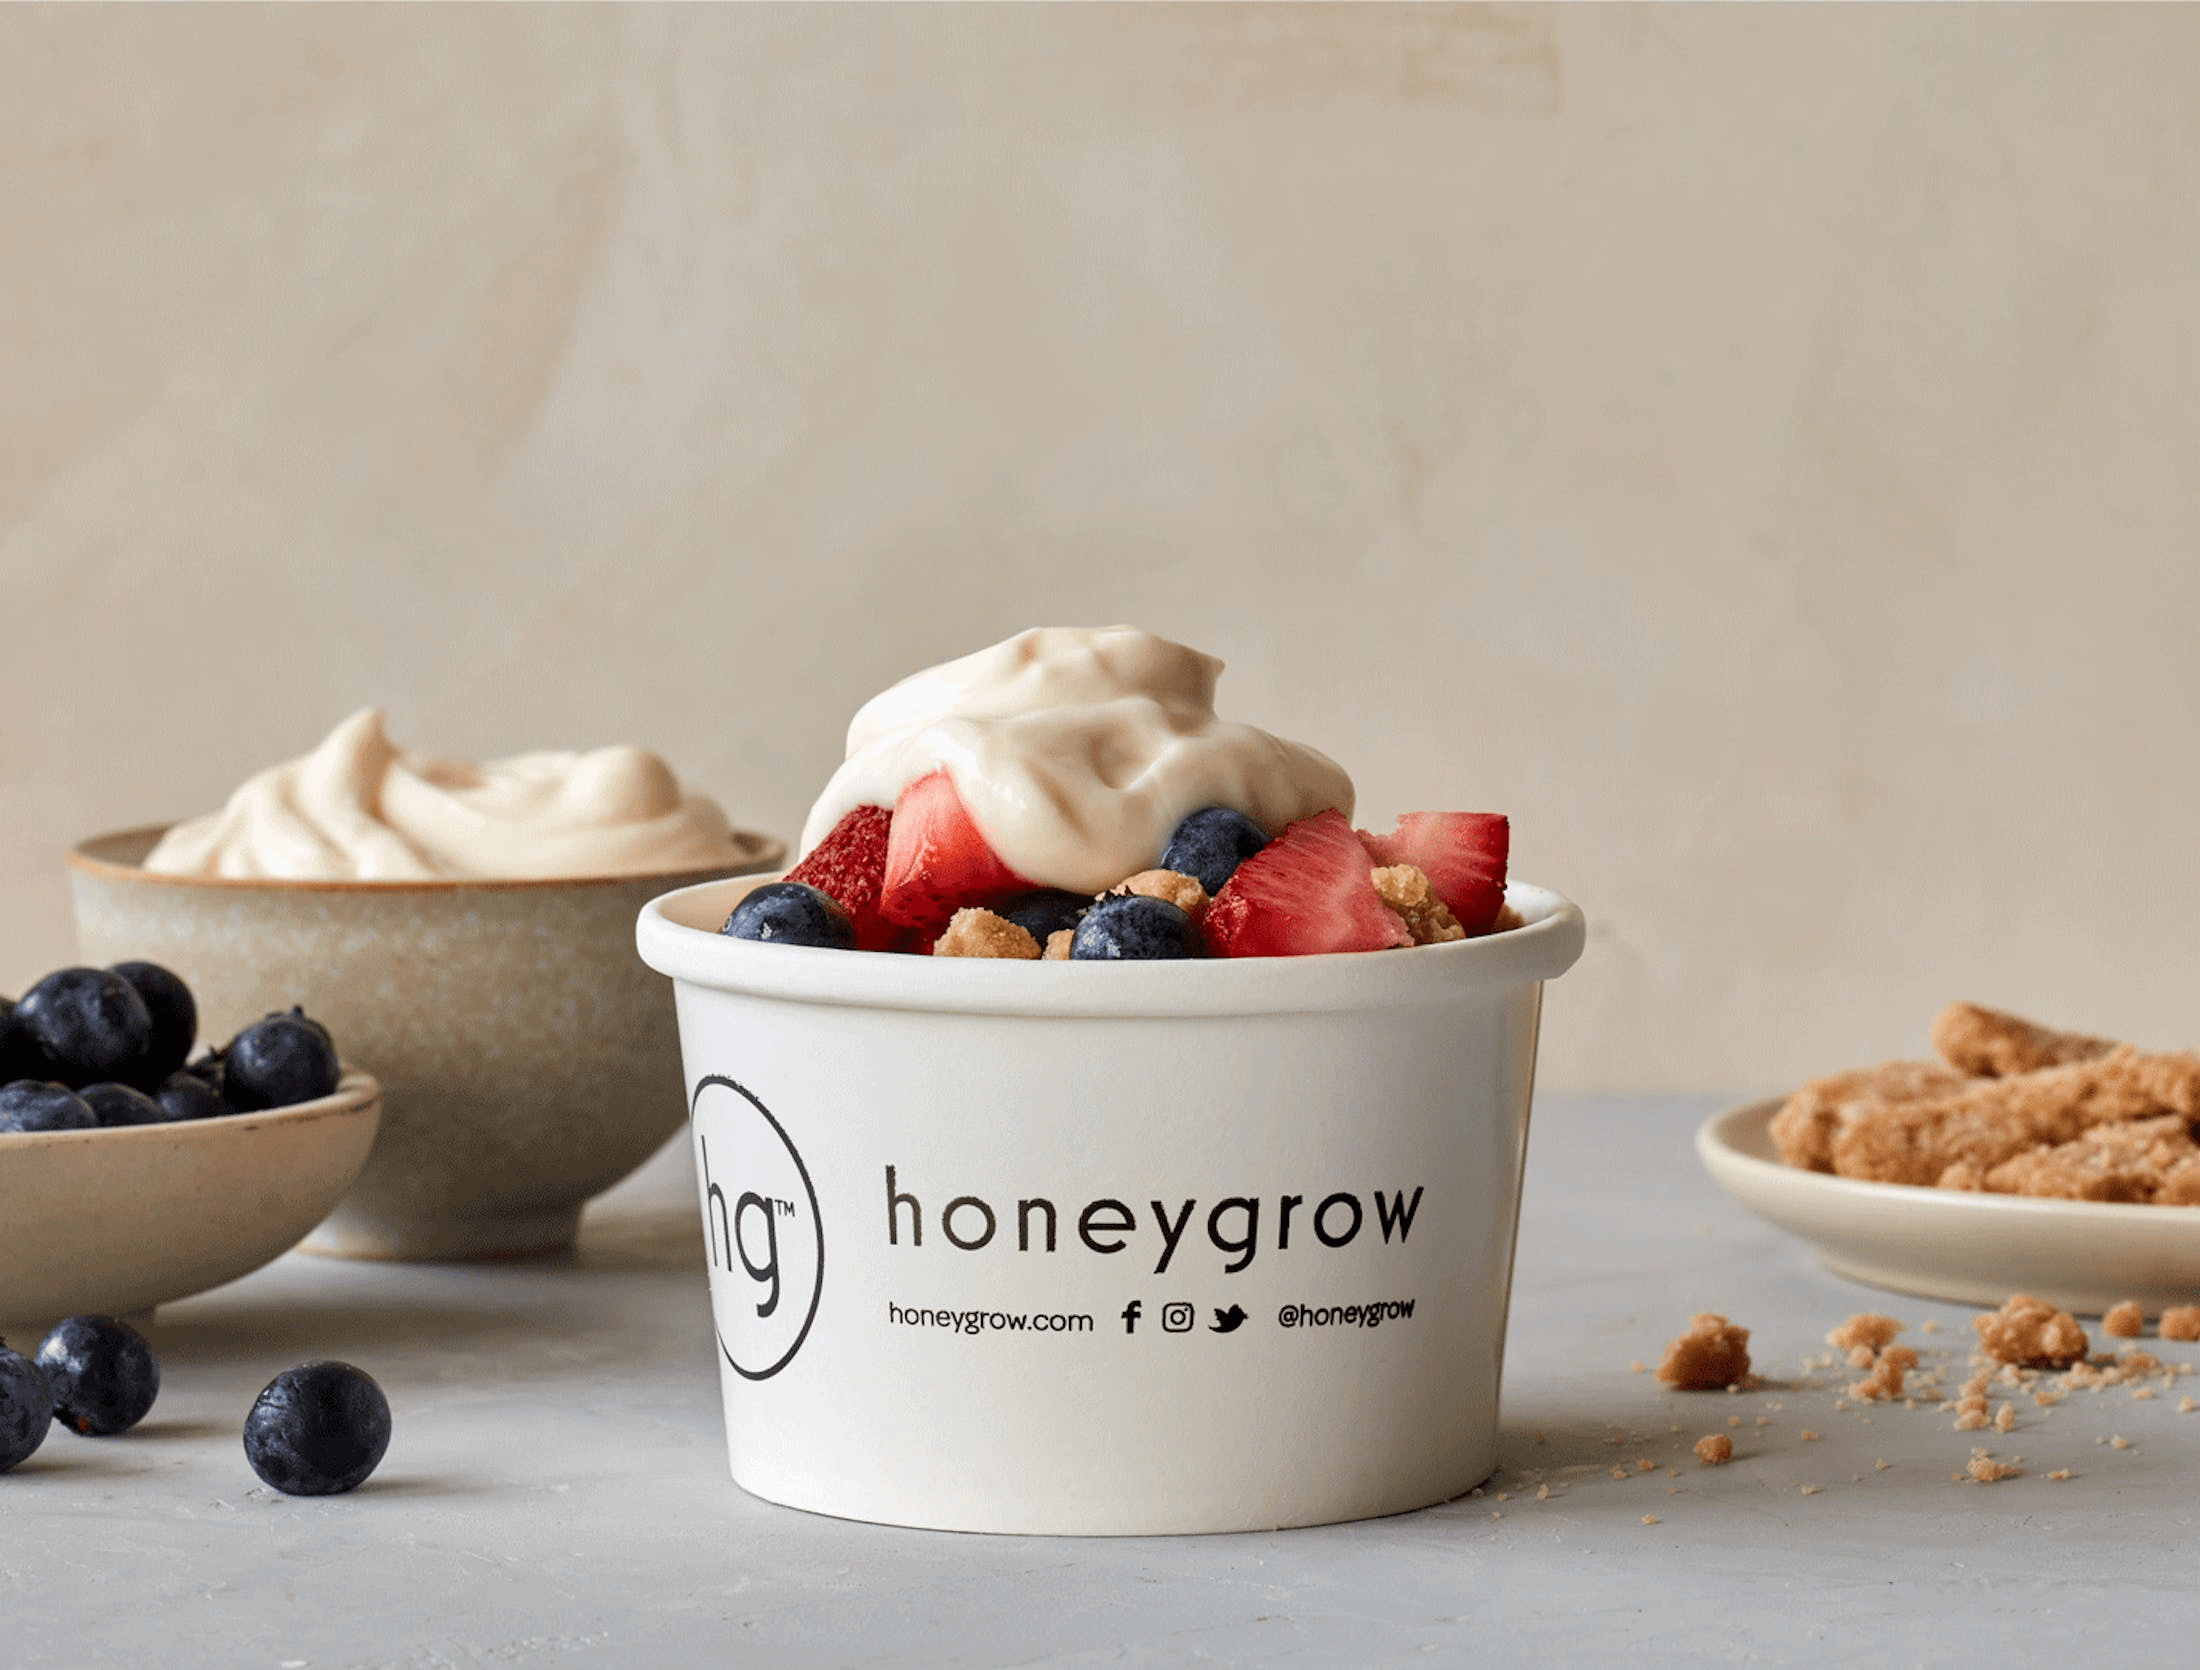 Honeygrow Cheesecake Honeybar Nutrition Facts